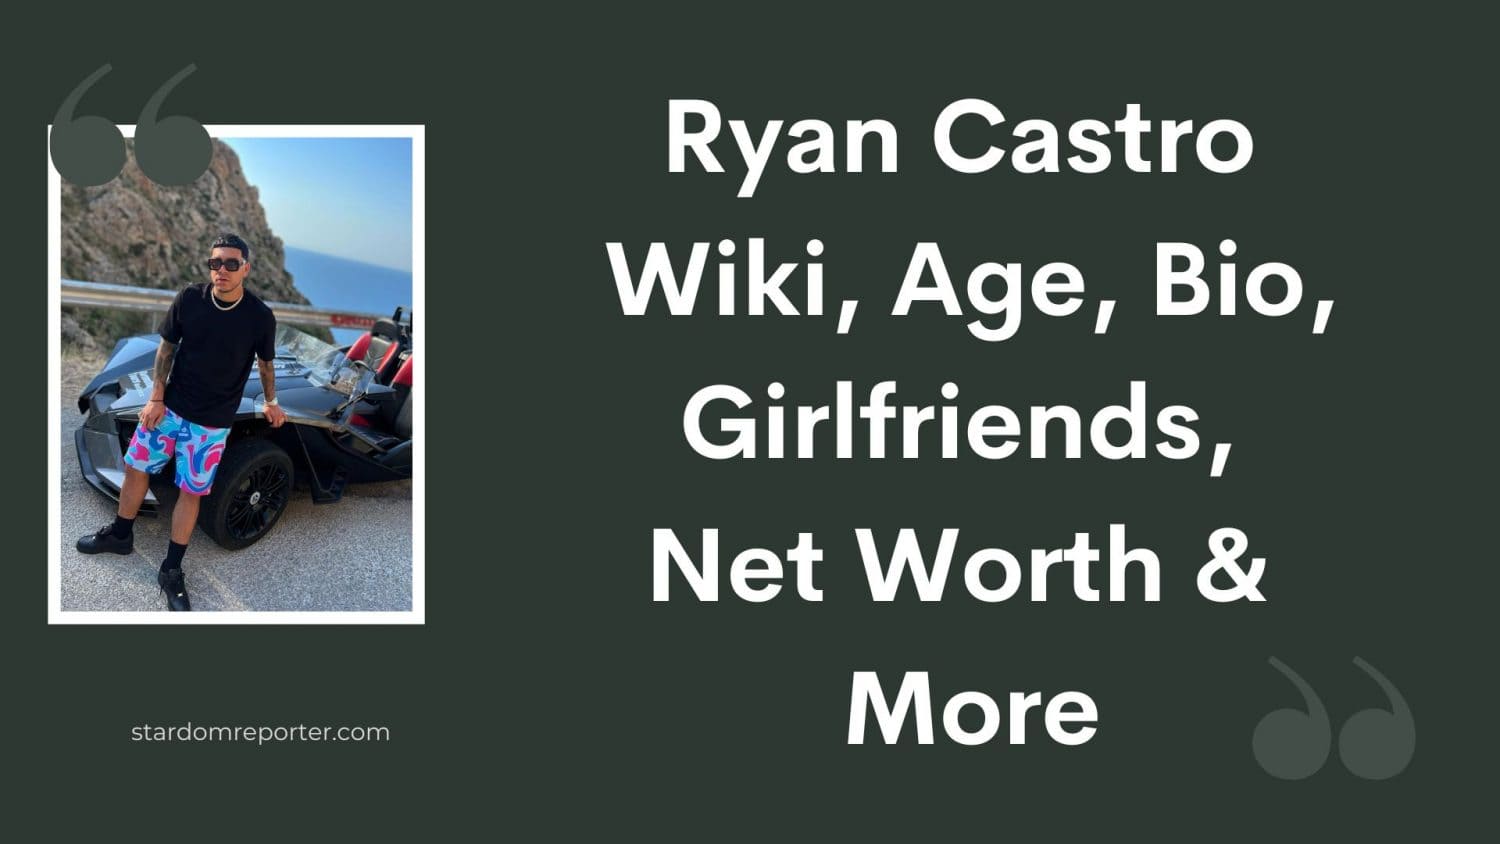 Ryan Castro Wiki, Age, Bio, Girlfriends, Net Worth & More - 21